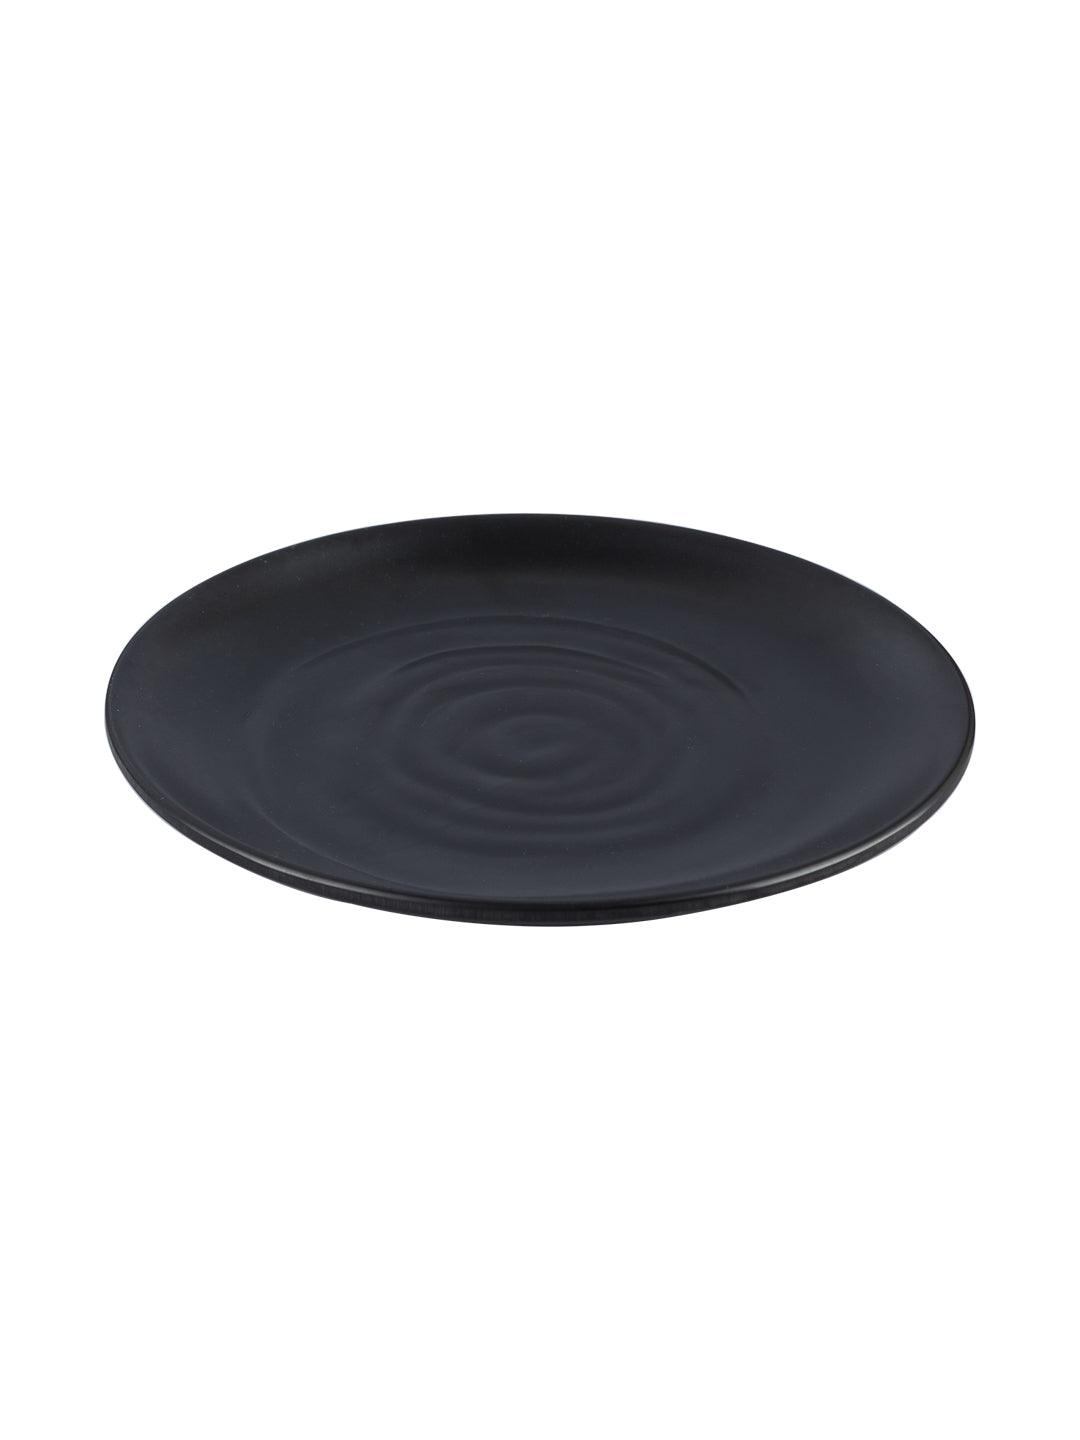 Melamine Black Round Quarter Plate (Set of 6) - MARKET 99